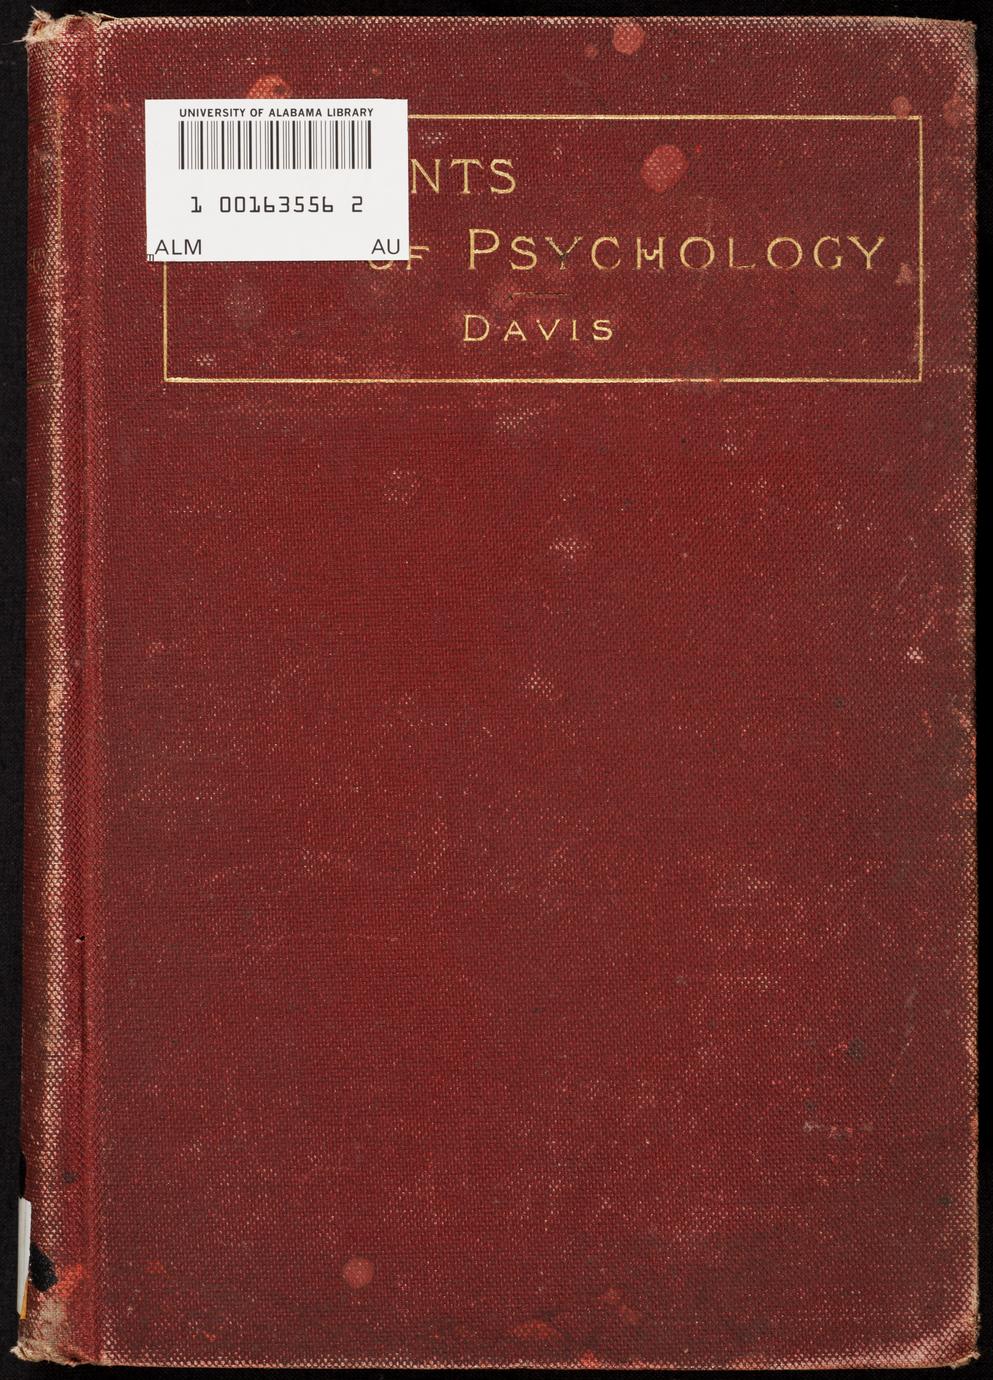 Elements of psychology (1 of 3)